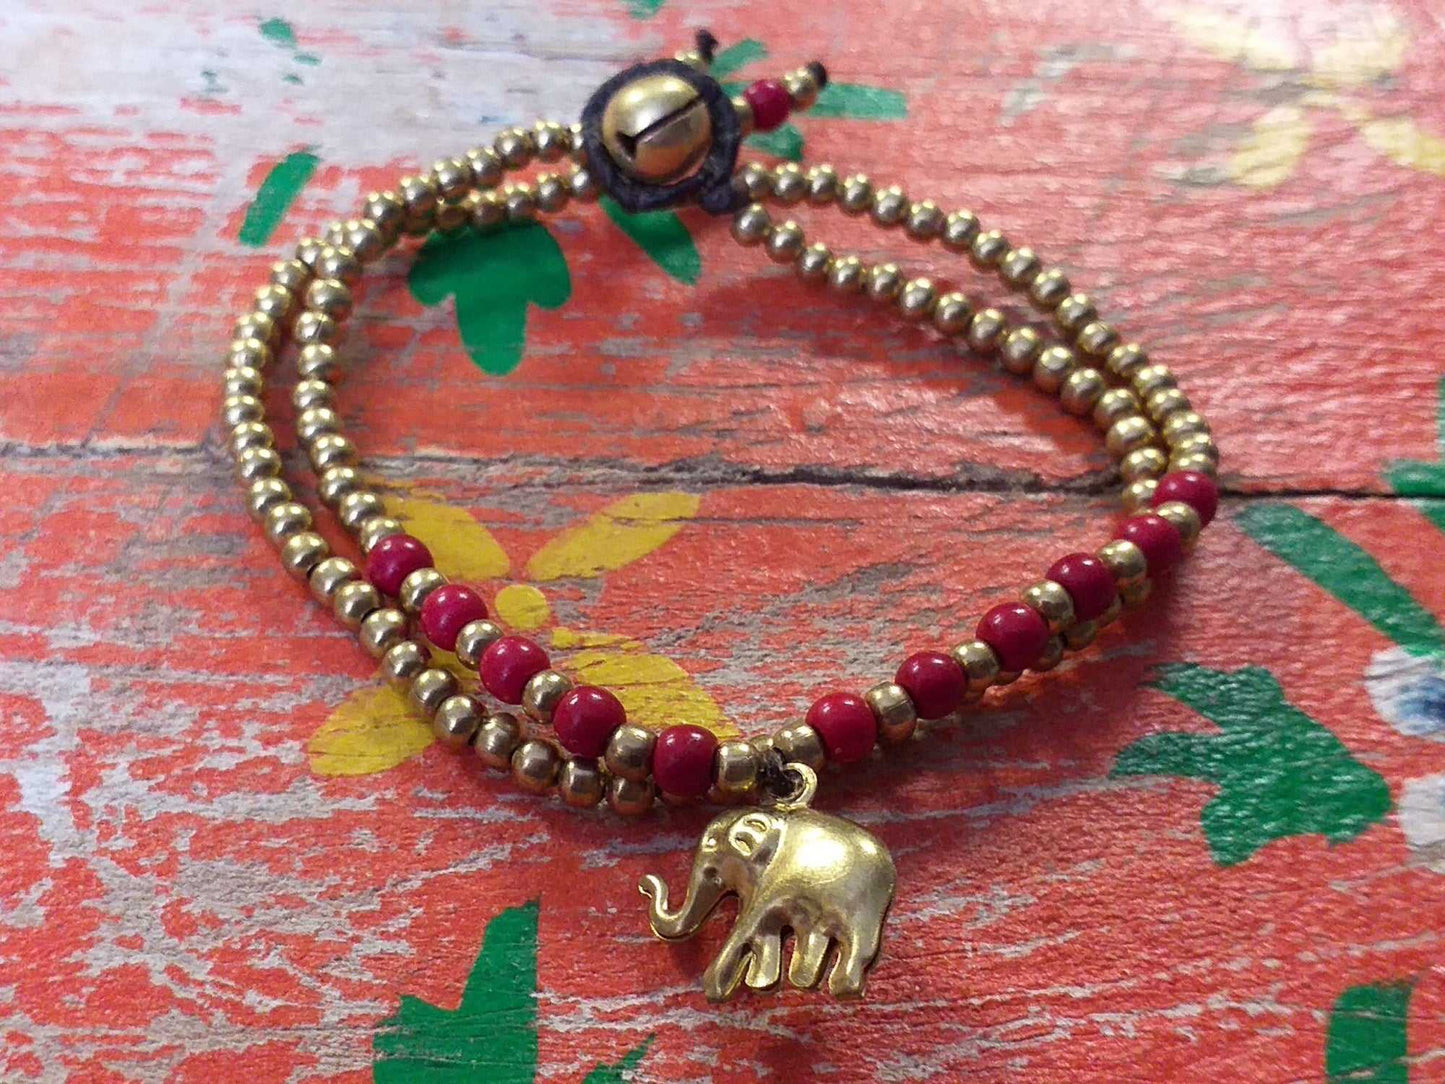 Elephant and Bead Bracelet